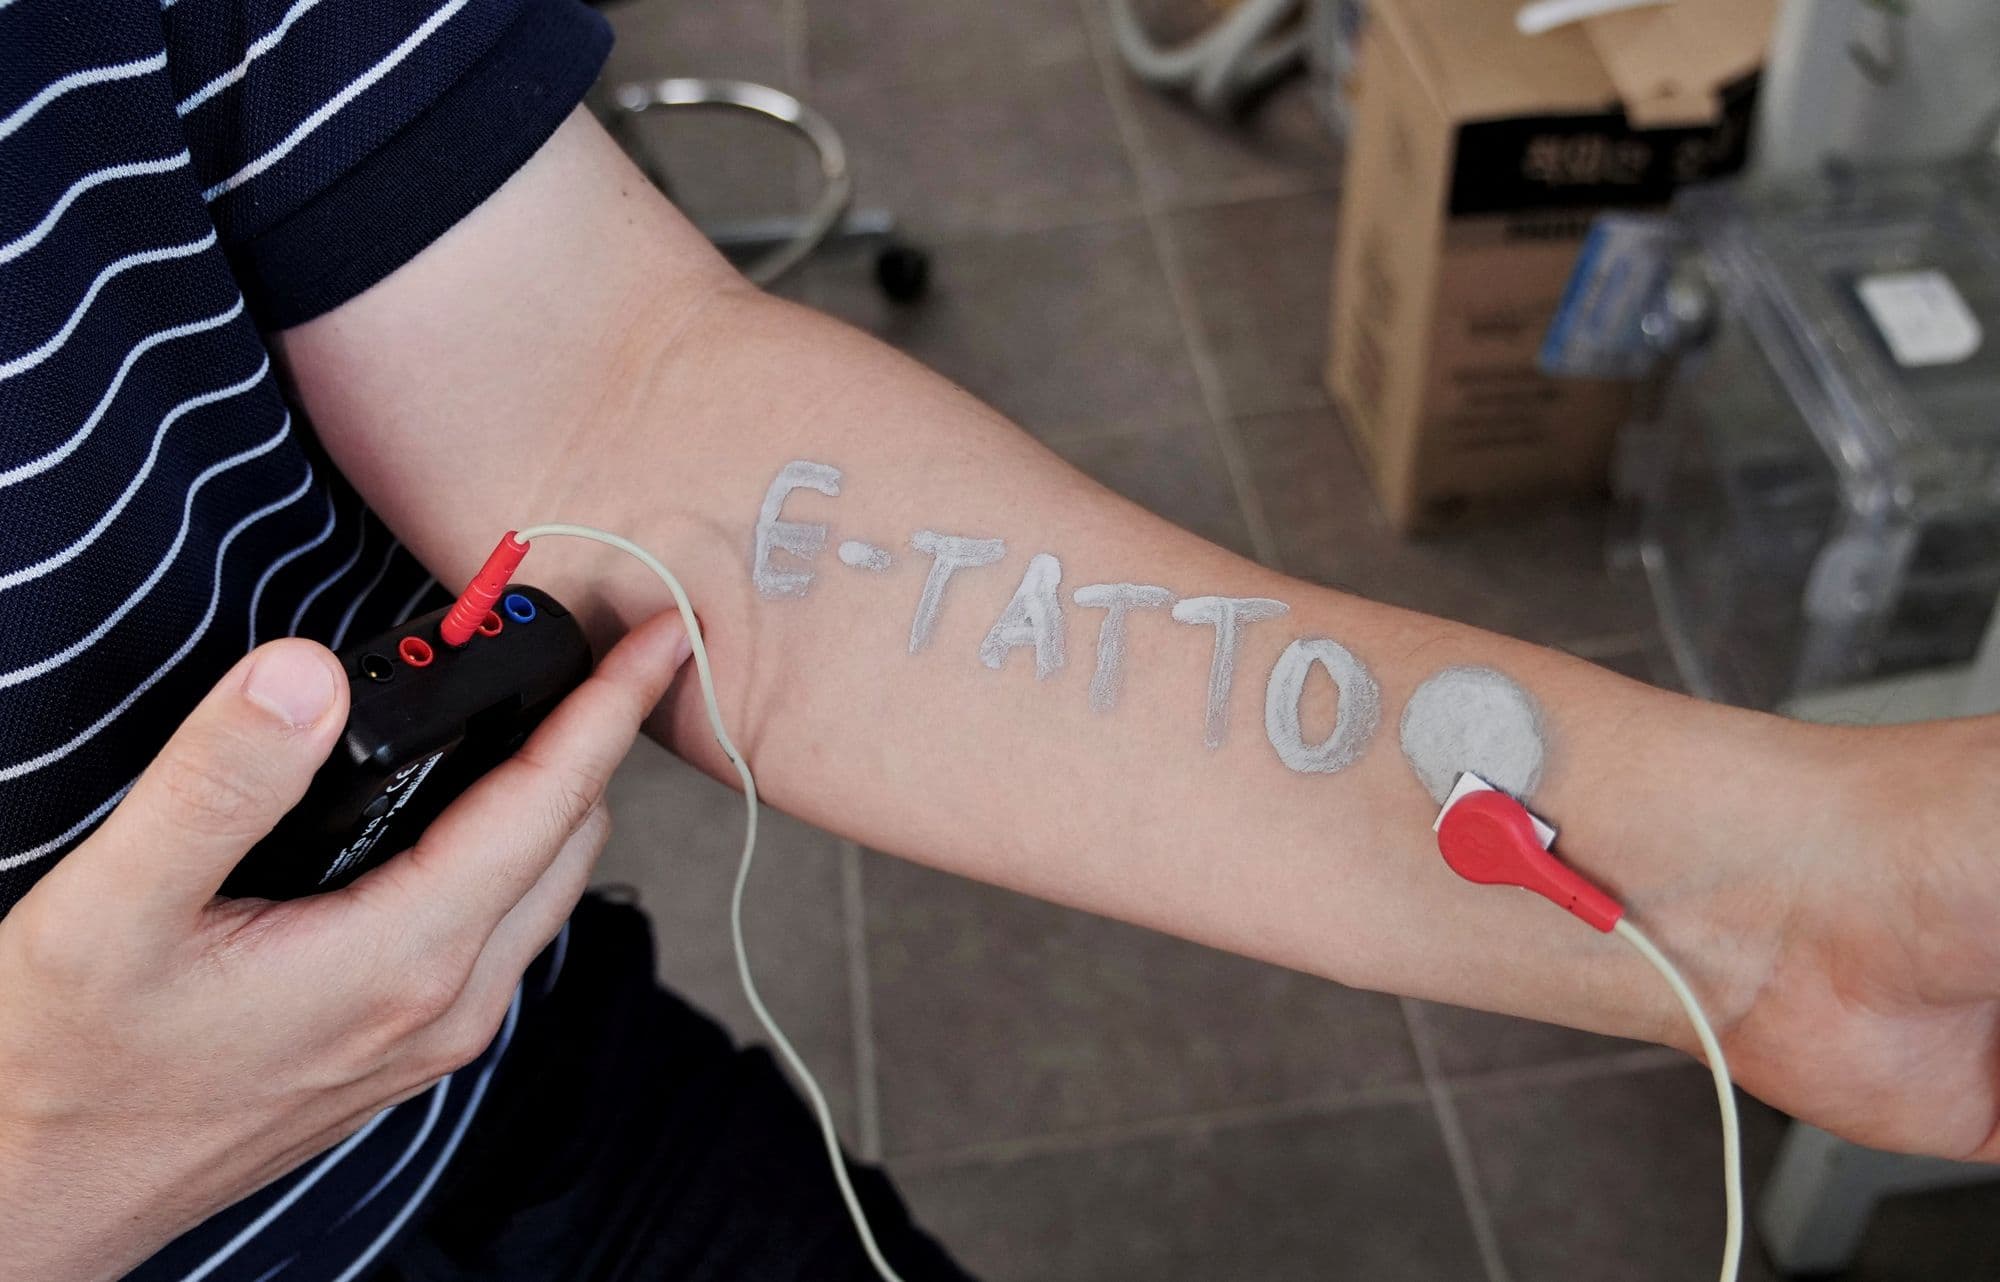 KAIST Develops Nano-Ink for Health Monitoring